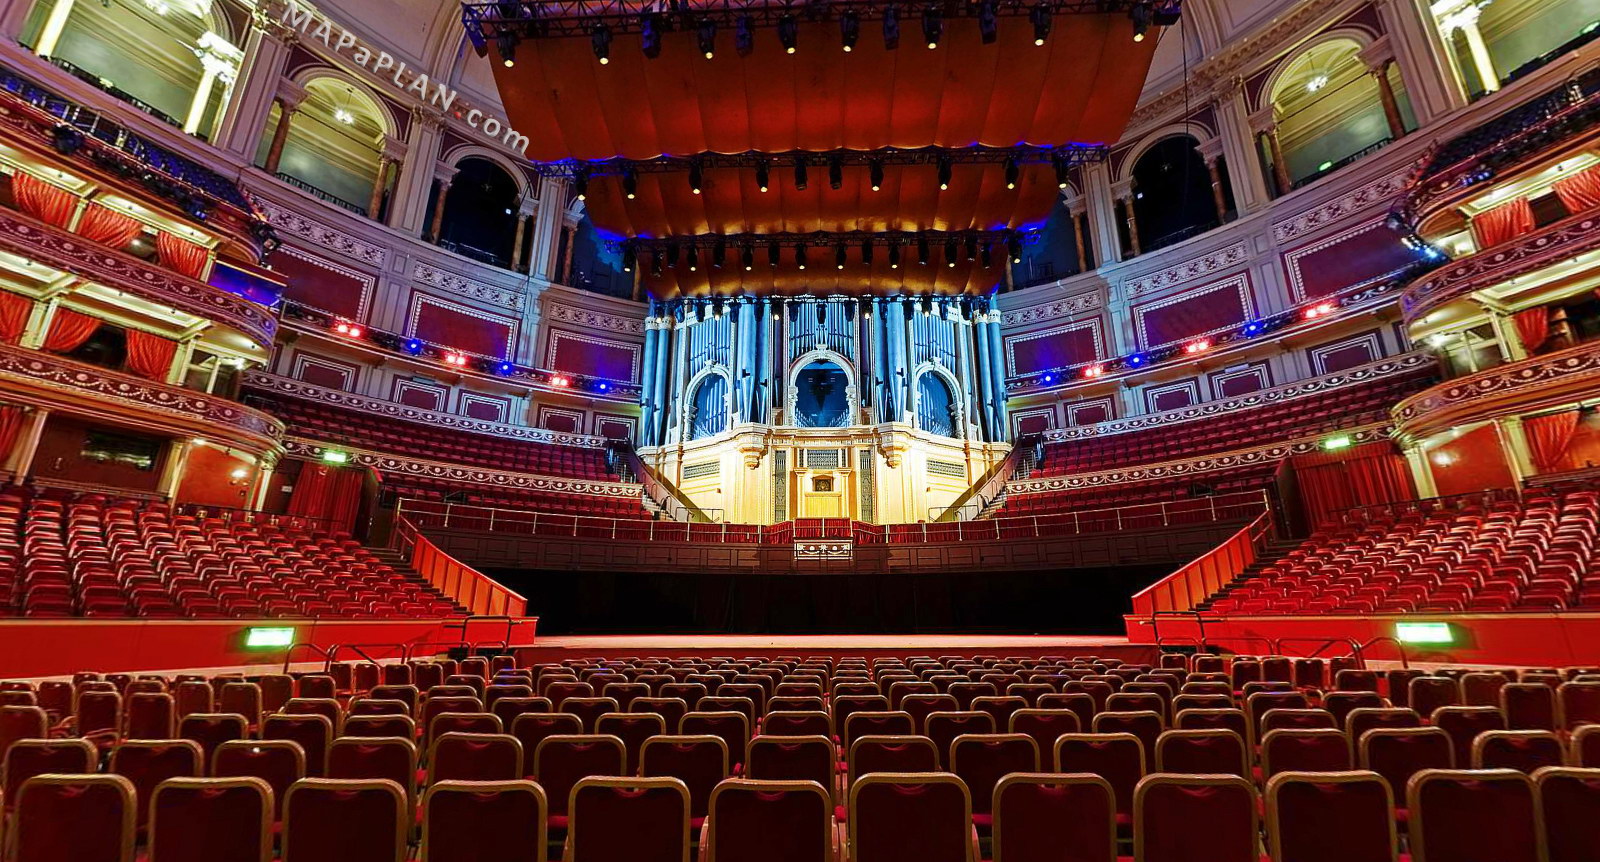 arena b e row 15 centre seats organ viewing experience Royal Albert Hall seating plan